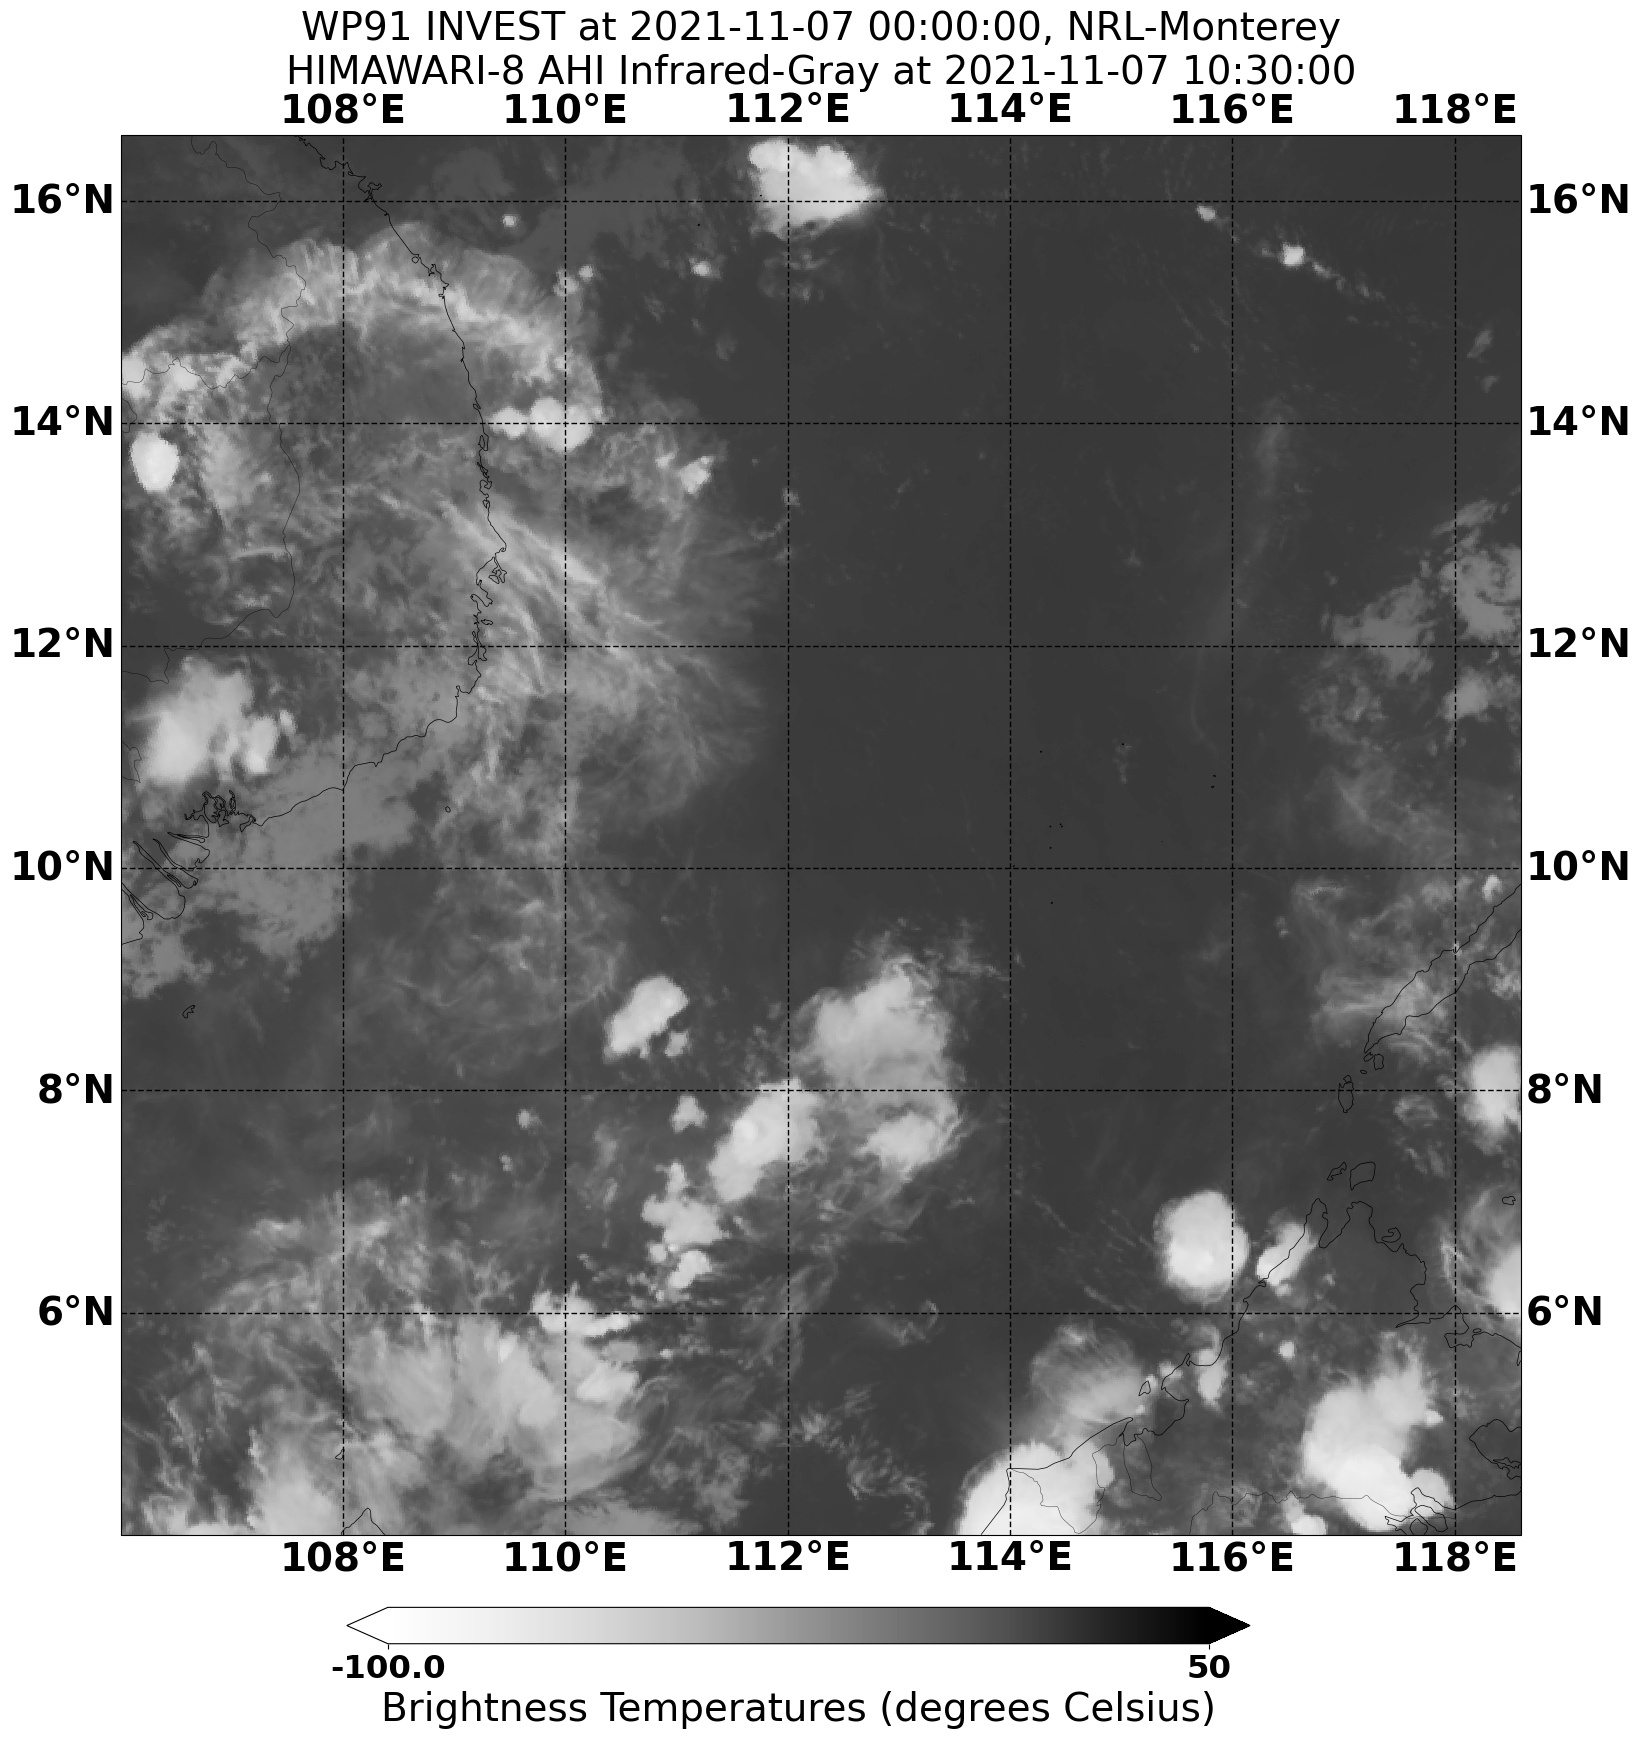 20211107.103000.WP912021.ahi.himawari-8.Infrared-Gray.15kts.100p0.1p0.jpg